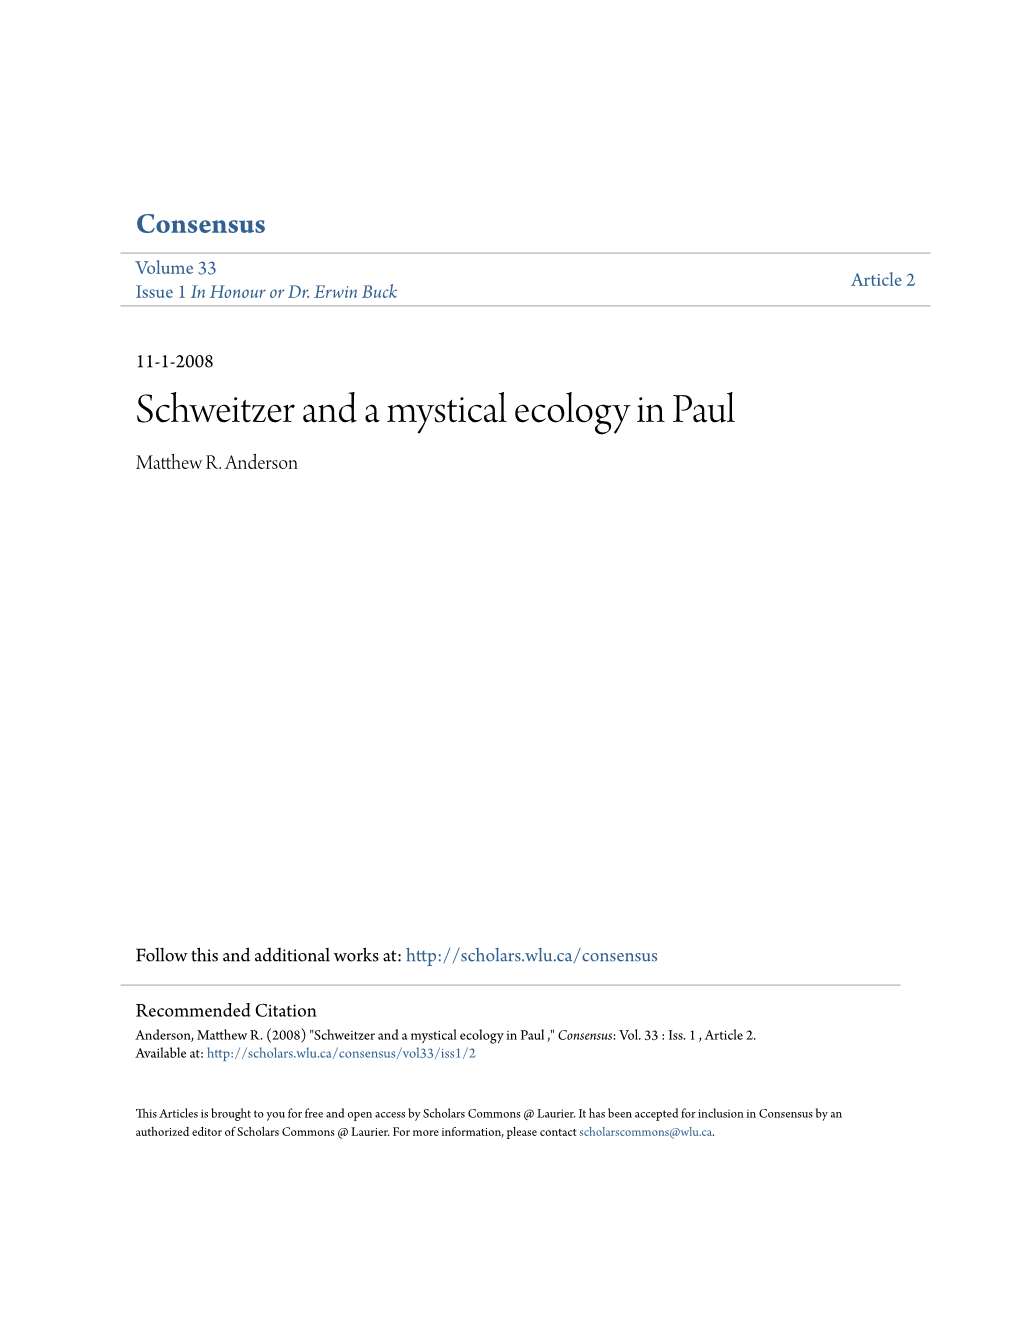 Schweitzer and a Mystical Ecology in Paul Matthew R